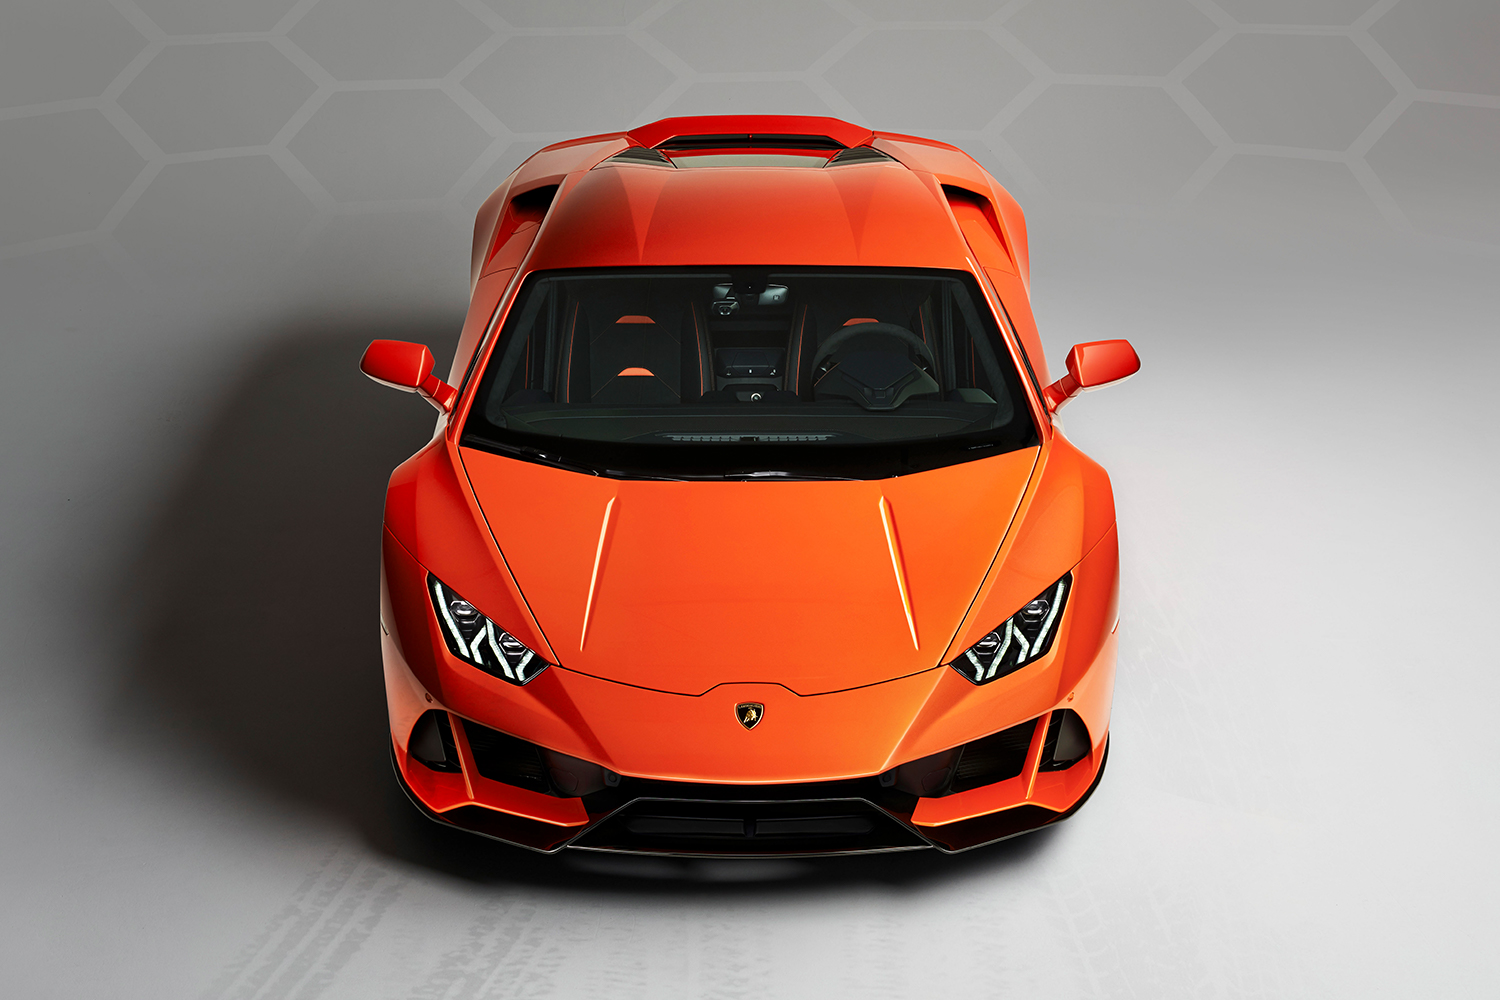 Lamborghini Huracán Evo supercar